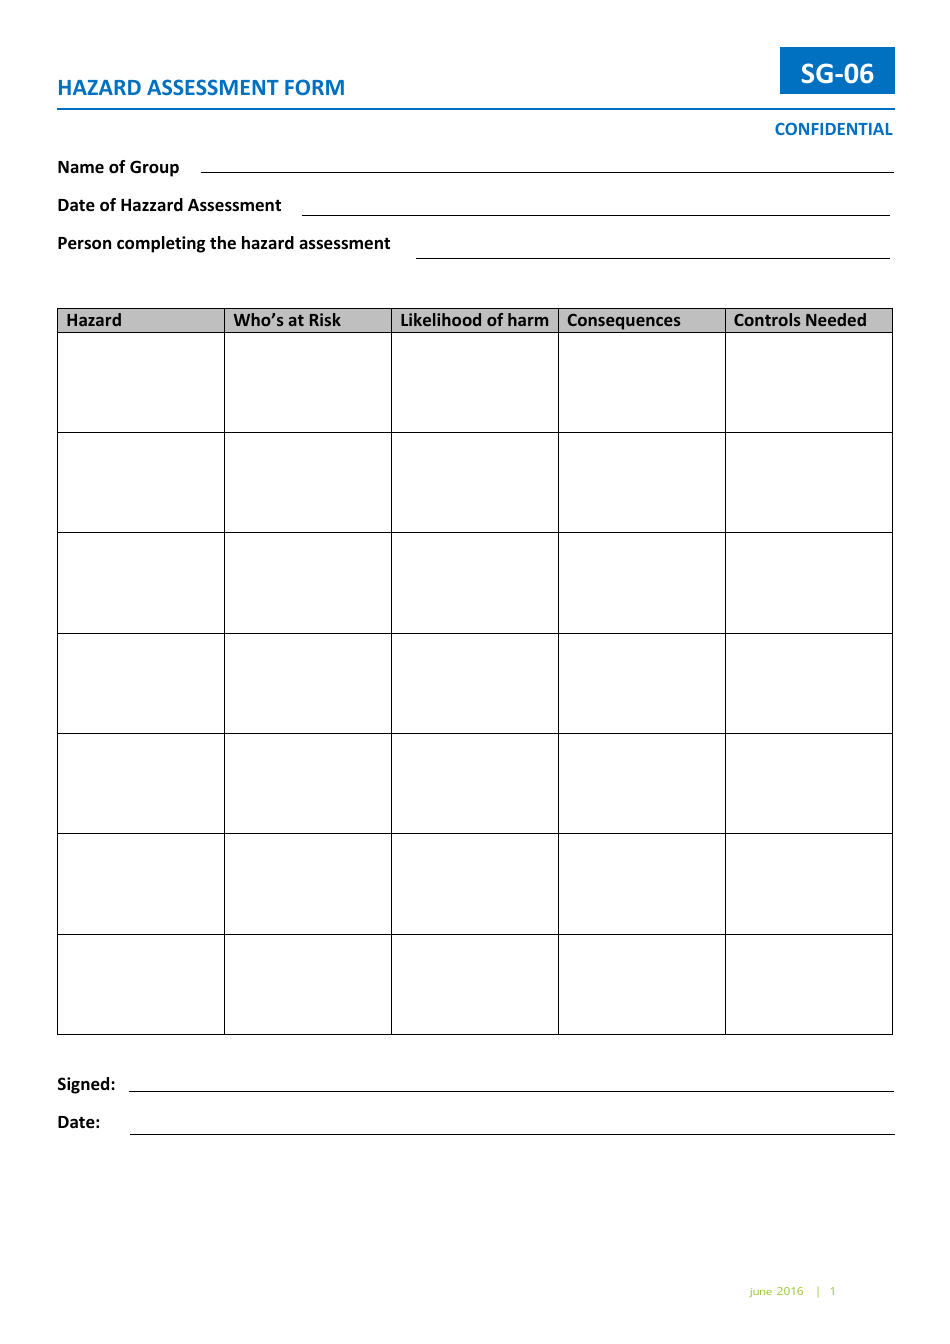 Hazard Assessment Form - SG-06, Page 1